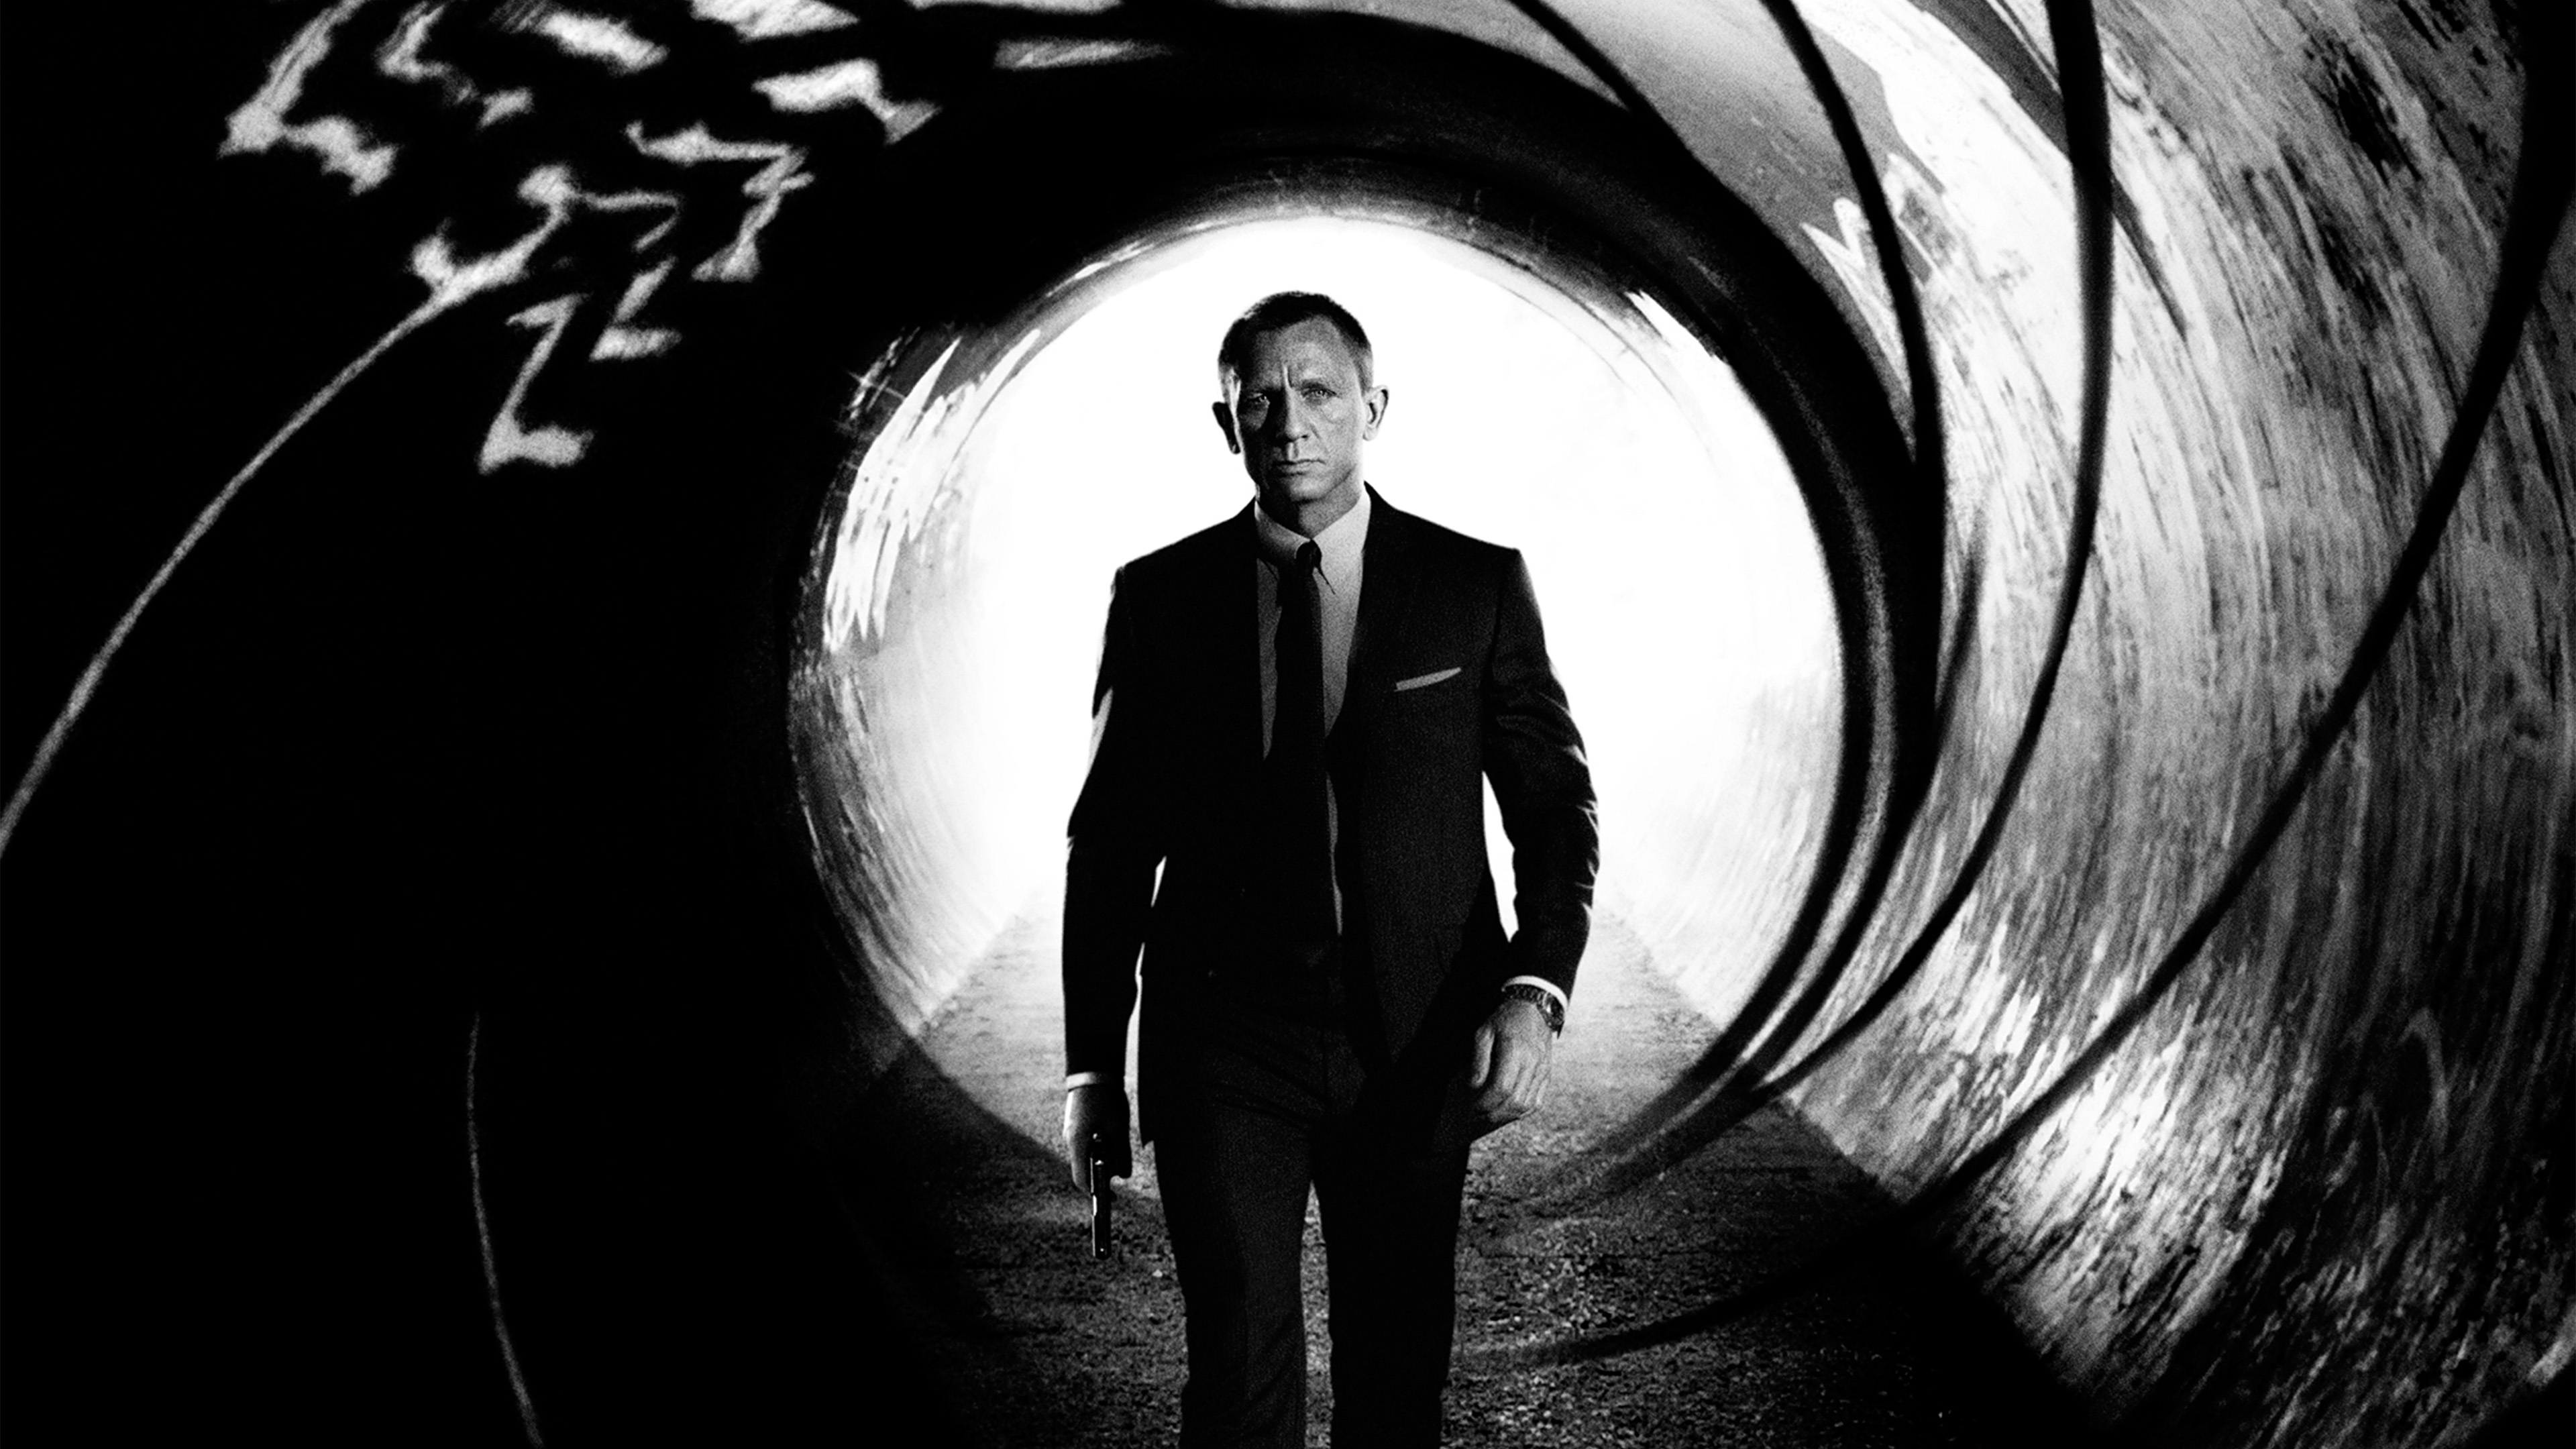 Download James Bond Greyscale Photo Wallpaper | Wallpapers.com